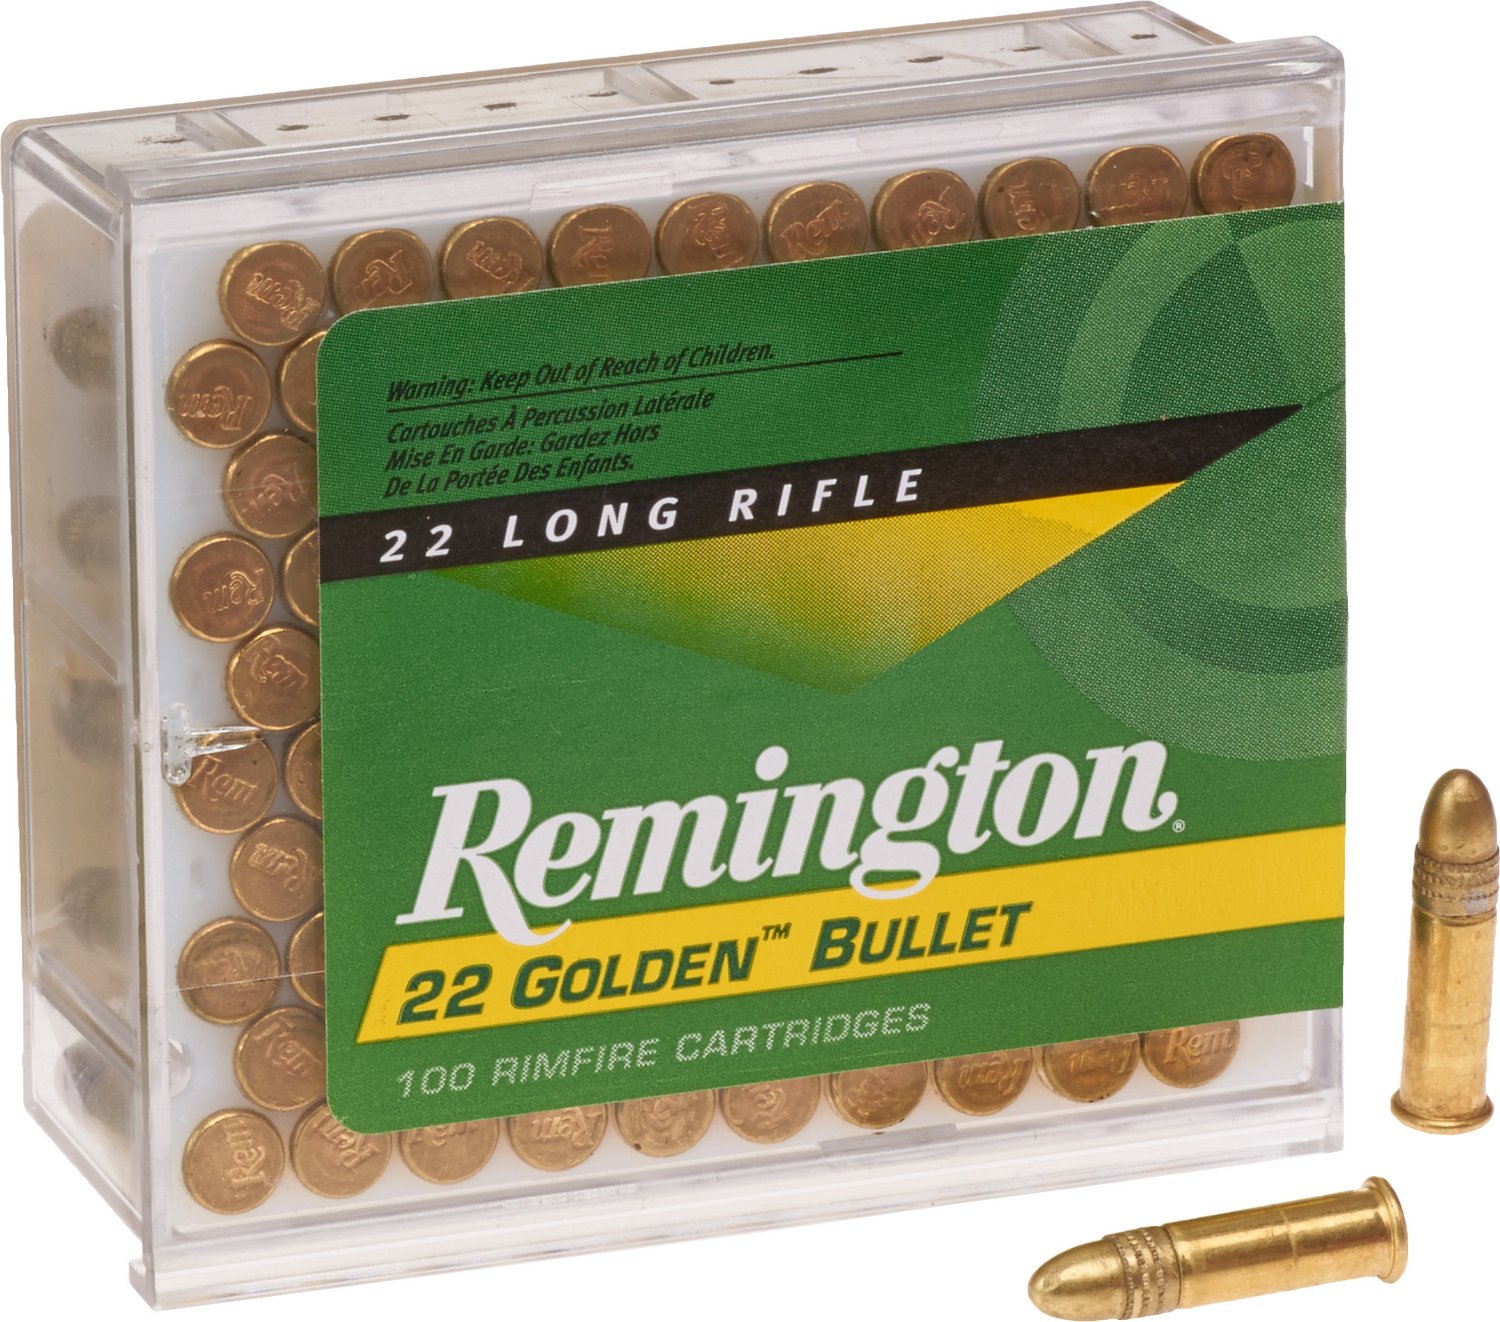 Grain rounds. LR 22 Remington Golden Bullet. Патроны Ремингтон 22лр. Remington 22lr патроны. Remington 22lr.